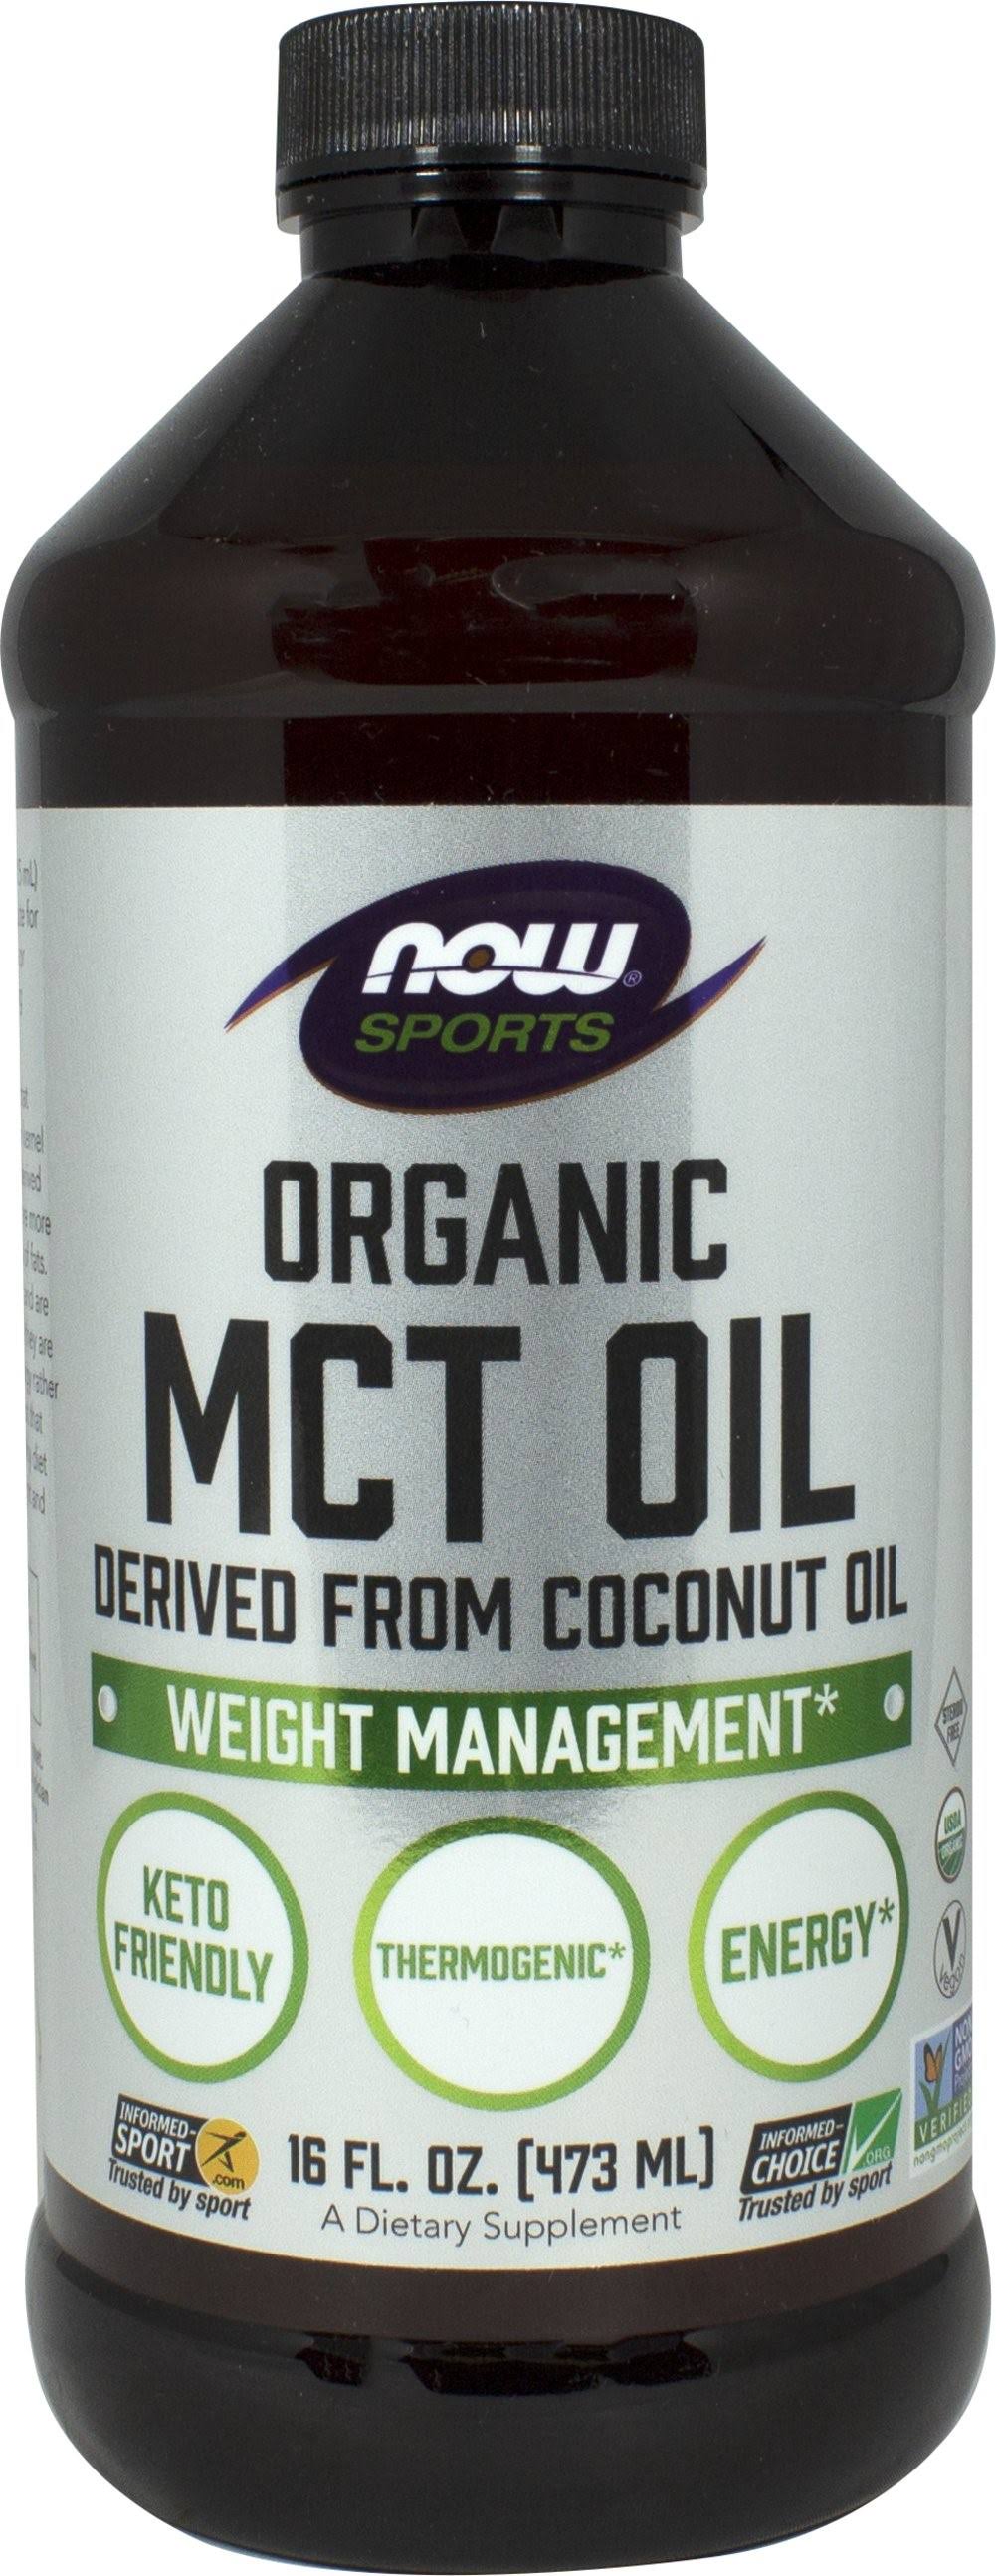 Now Sports MCT Oil, Organic - 16 fl oz